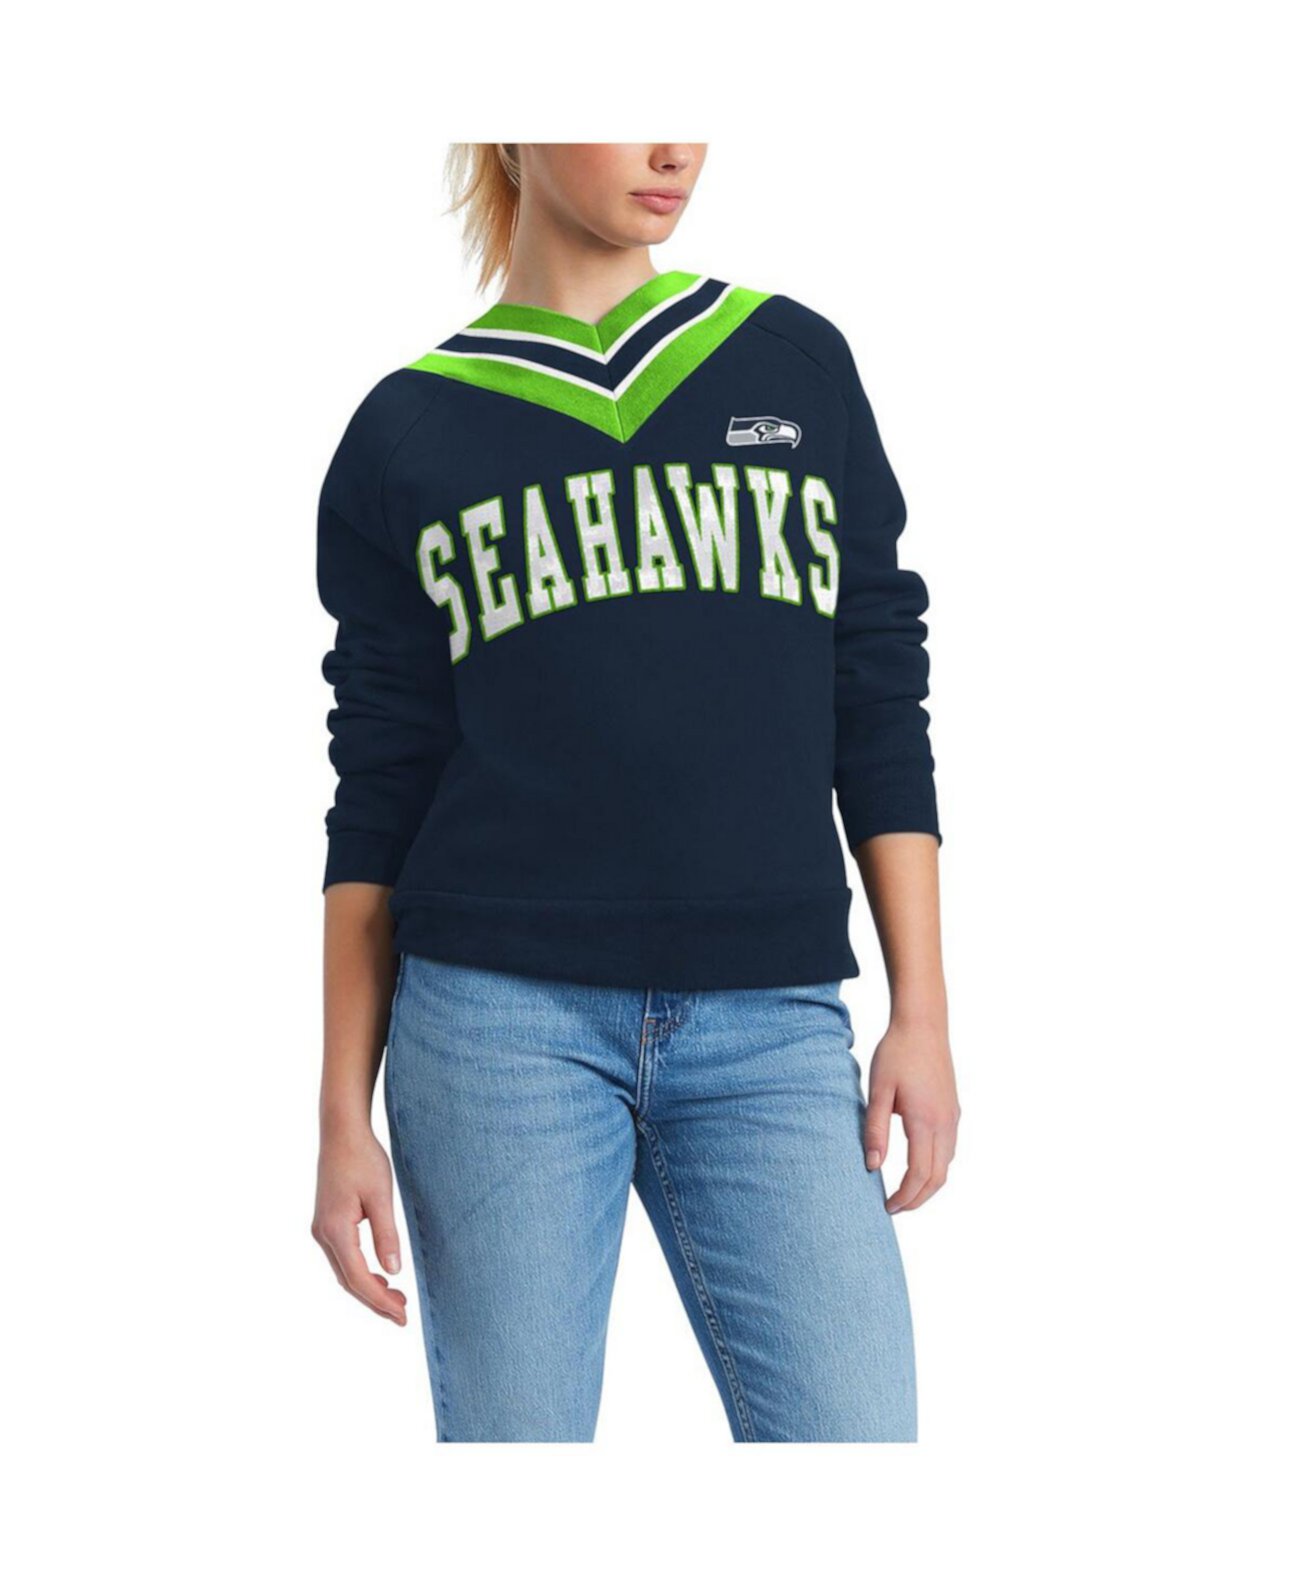 Женский свитер с V-образным вырезом Tommy Hilfiger Seattle Seahawks Heidi Tommy Hilfiger